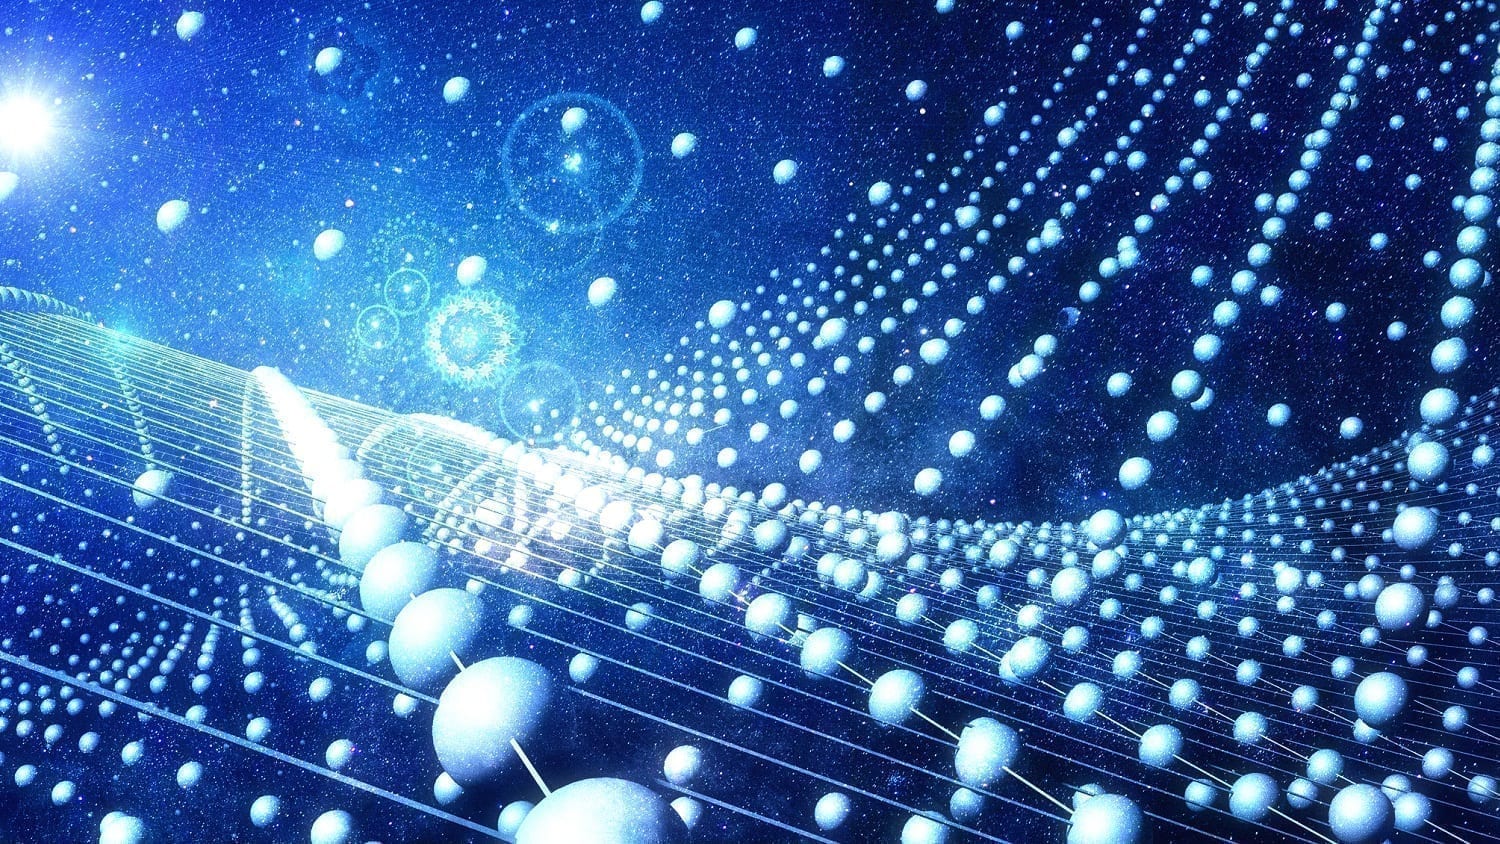 Quantum waves fluctuating with point spheres: Illustration 153565084 © Rik Trottier | Dreamstime.com